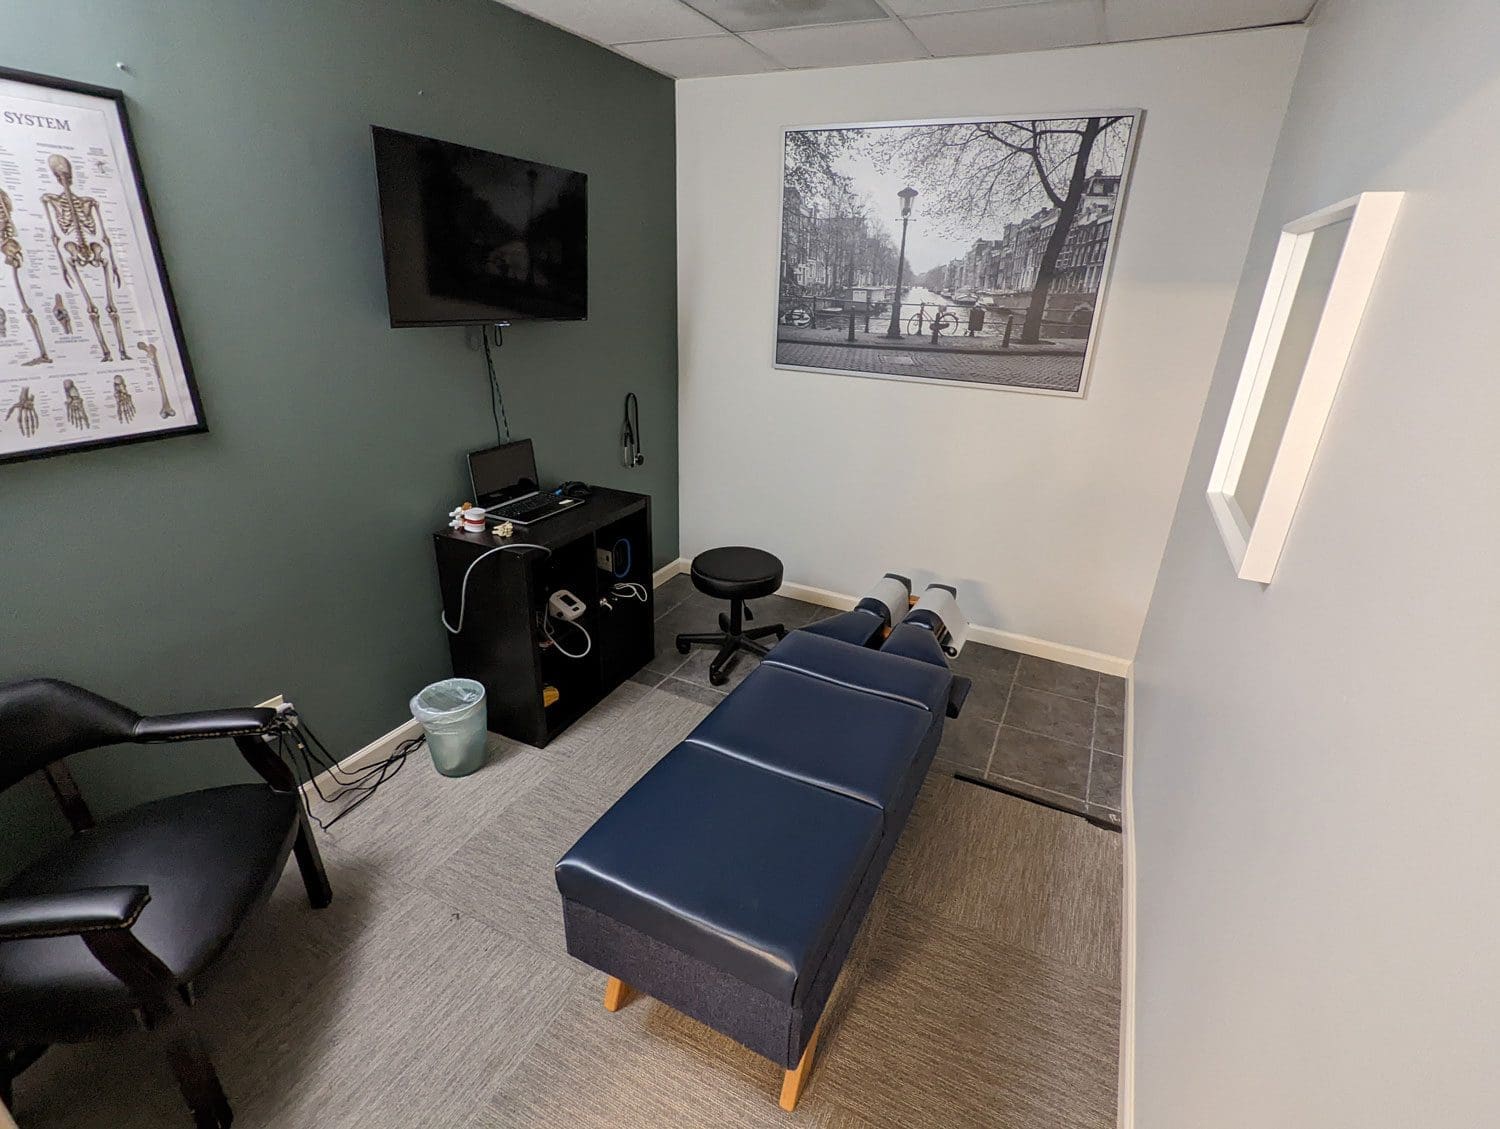 NE Portland Chiropractor treatment room with chiropractic adjustment table.